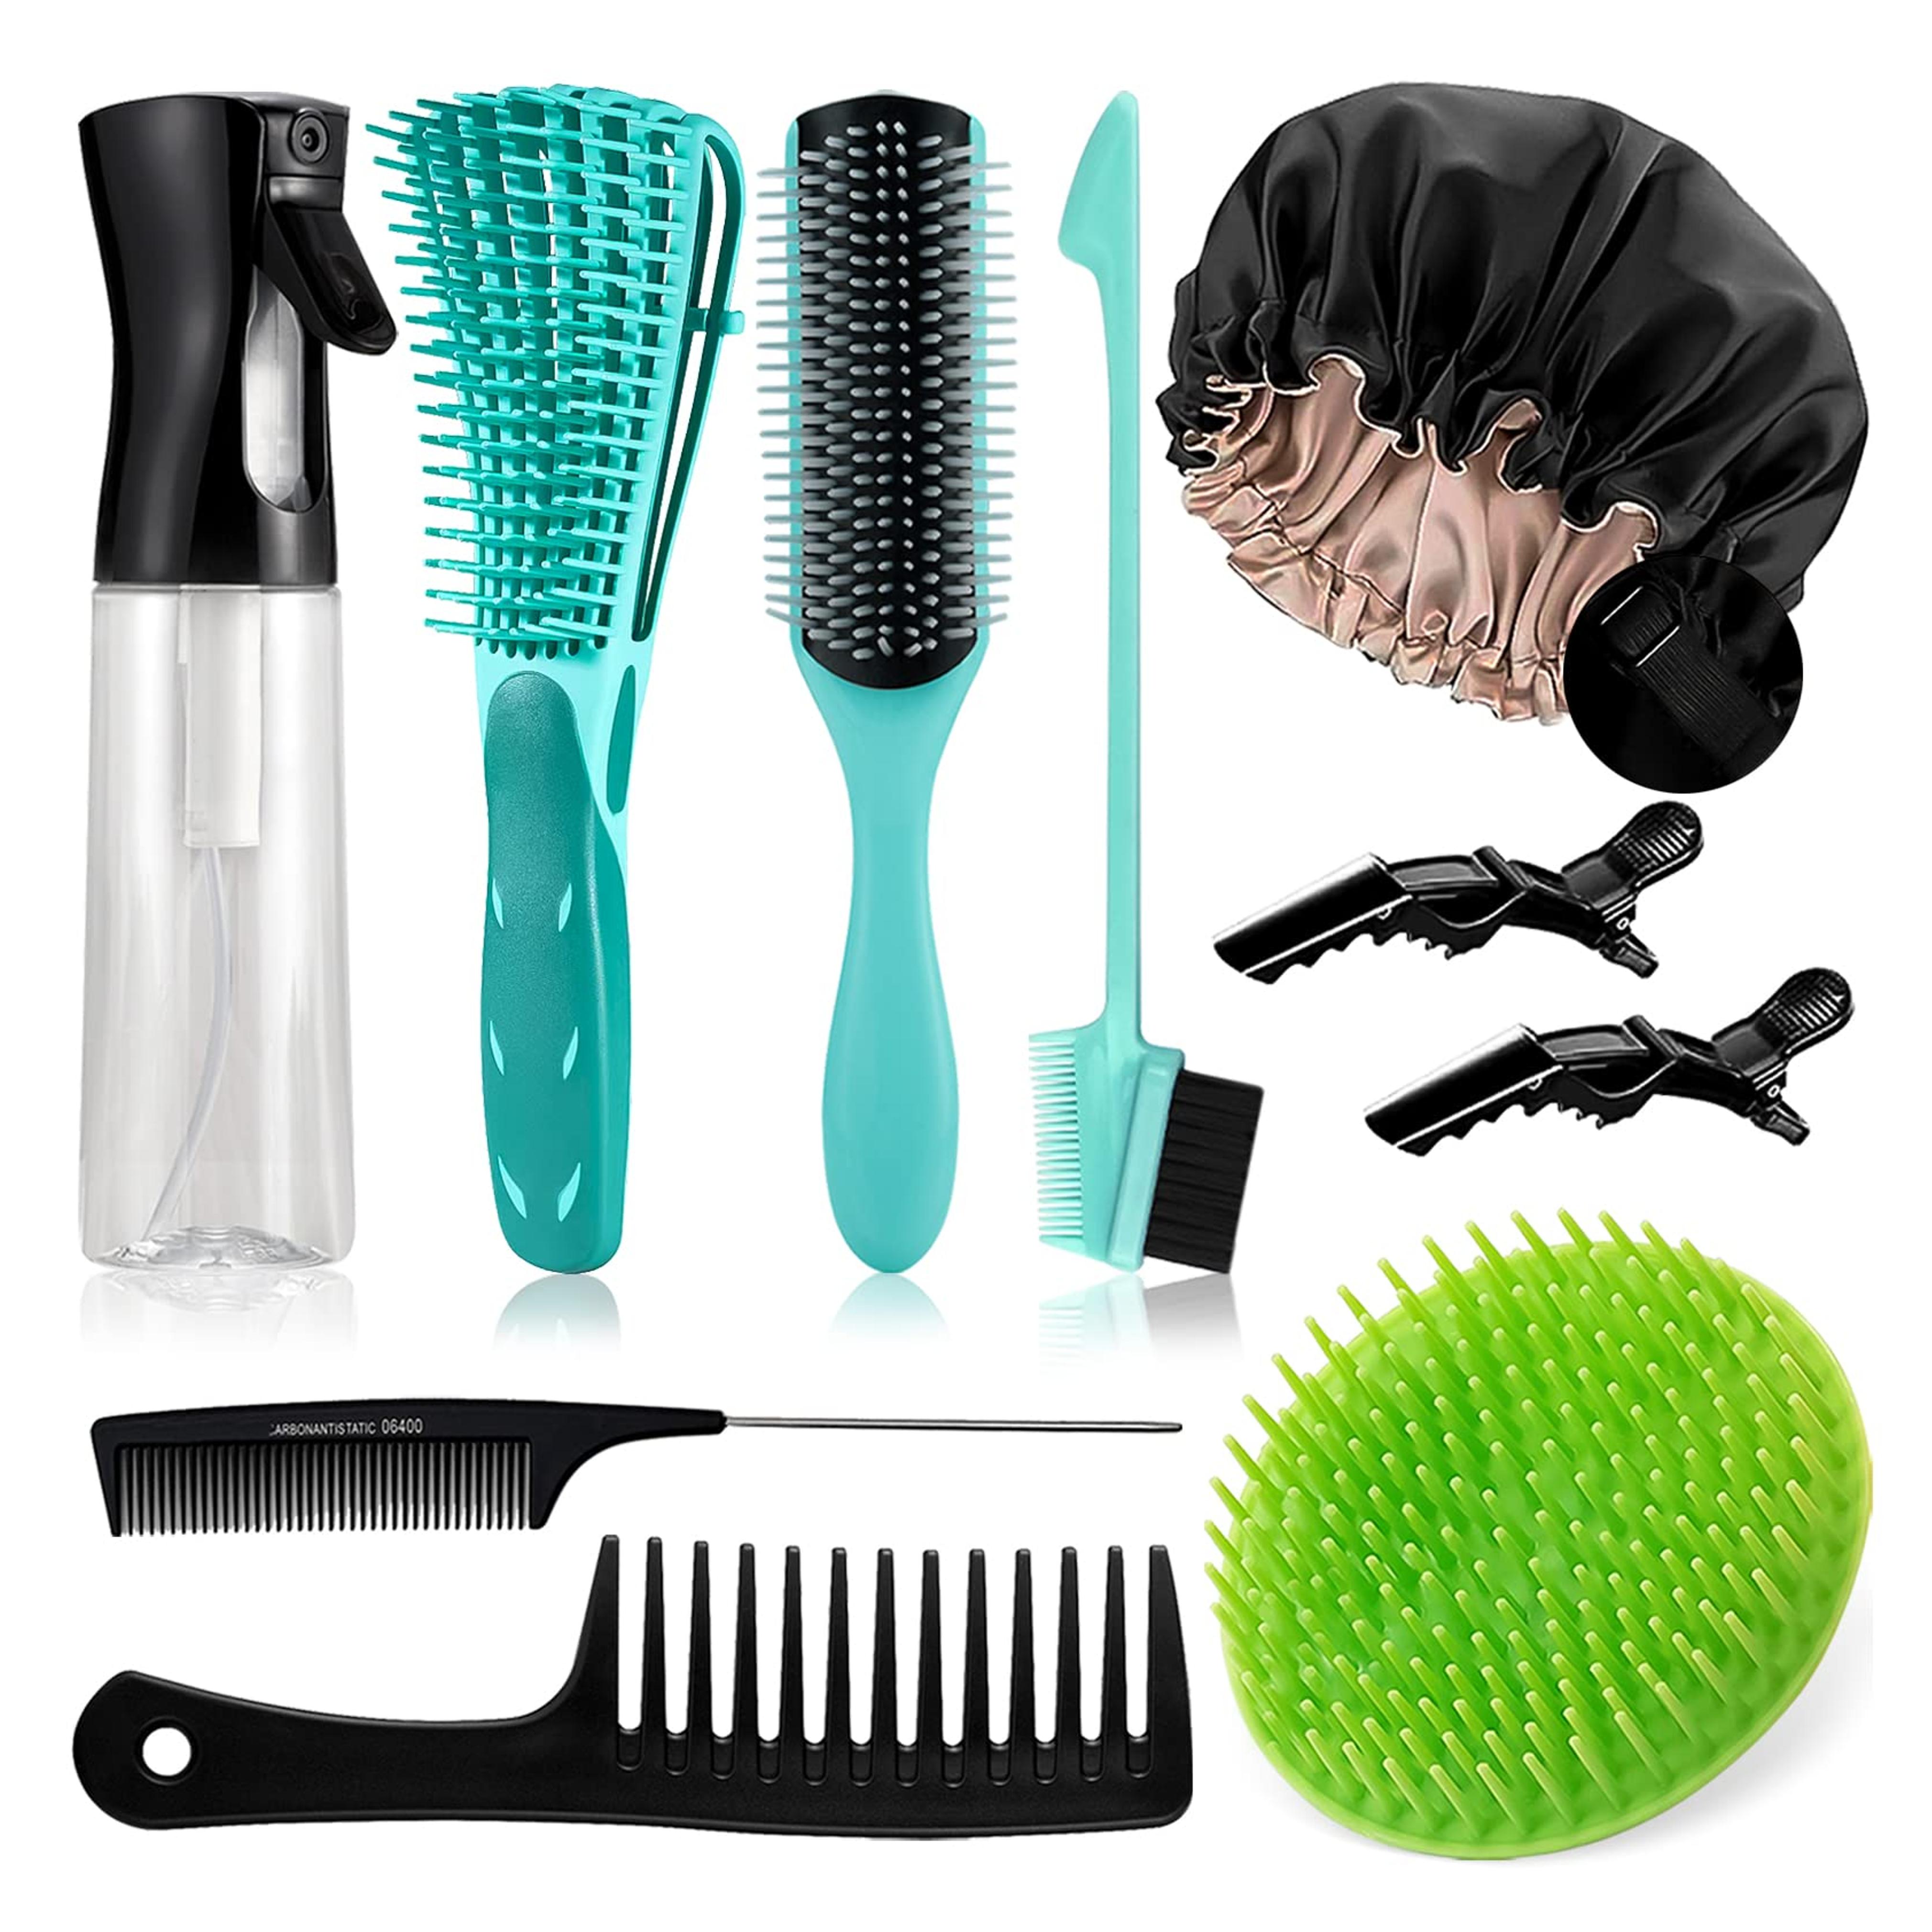 10PCS Detangling Brush Set, Detangling Brush and Comb for Black Natural Hair, Curly Hair Brush Set with Spray Bottle & Sleep Bonnet, Easier and Faster Detangling on Wash Days